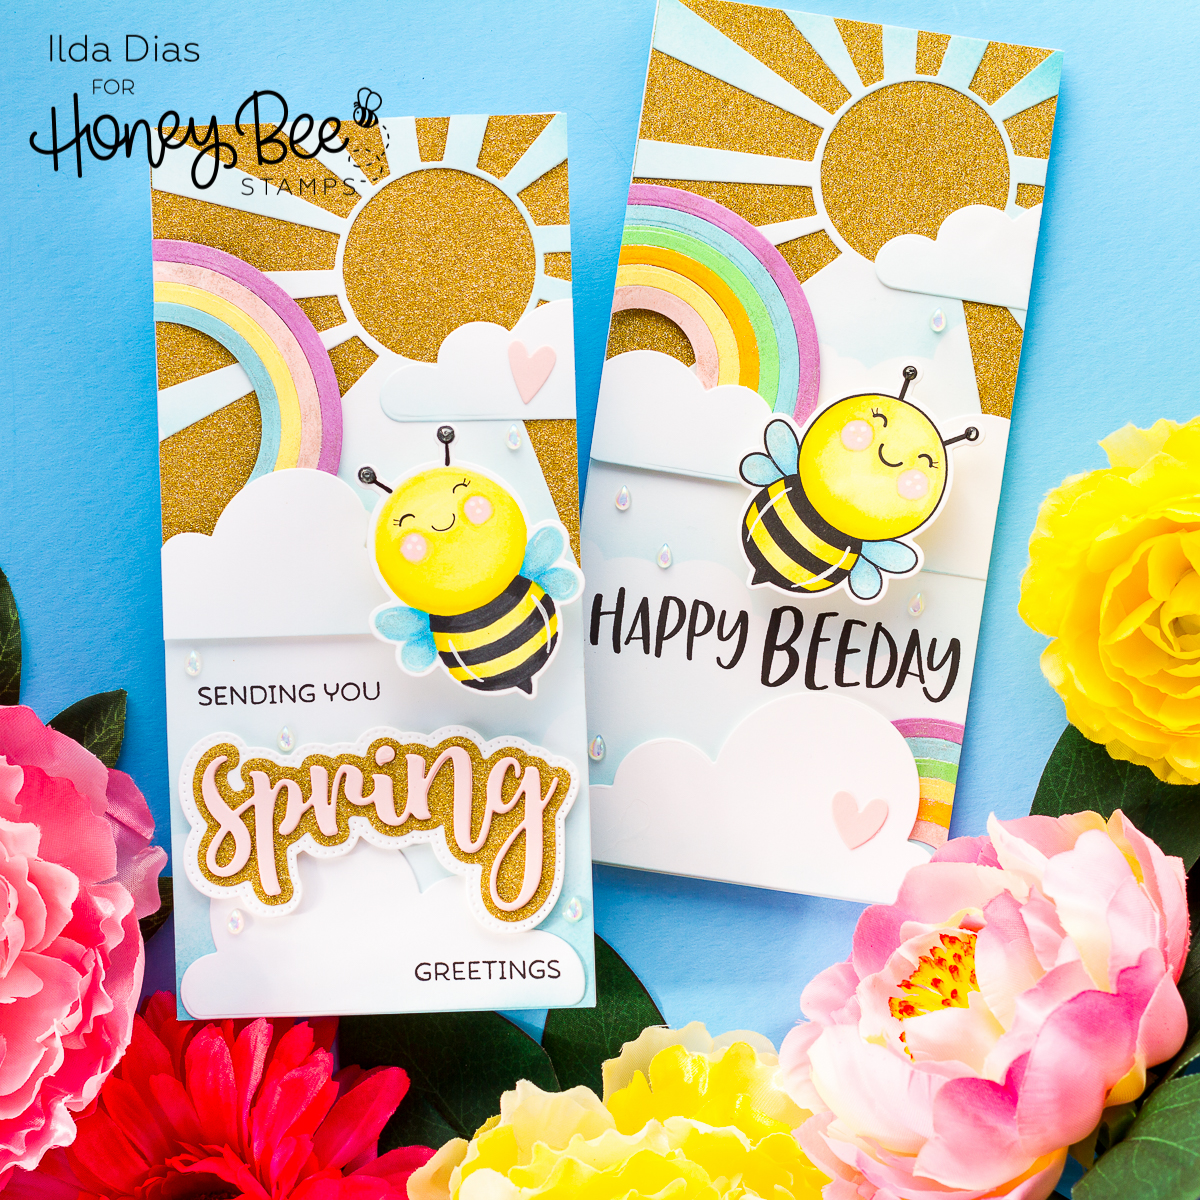 Action Wobble Spring Showers Slimline Scene Cards for Honey Bee Stamps